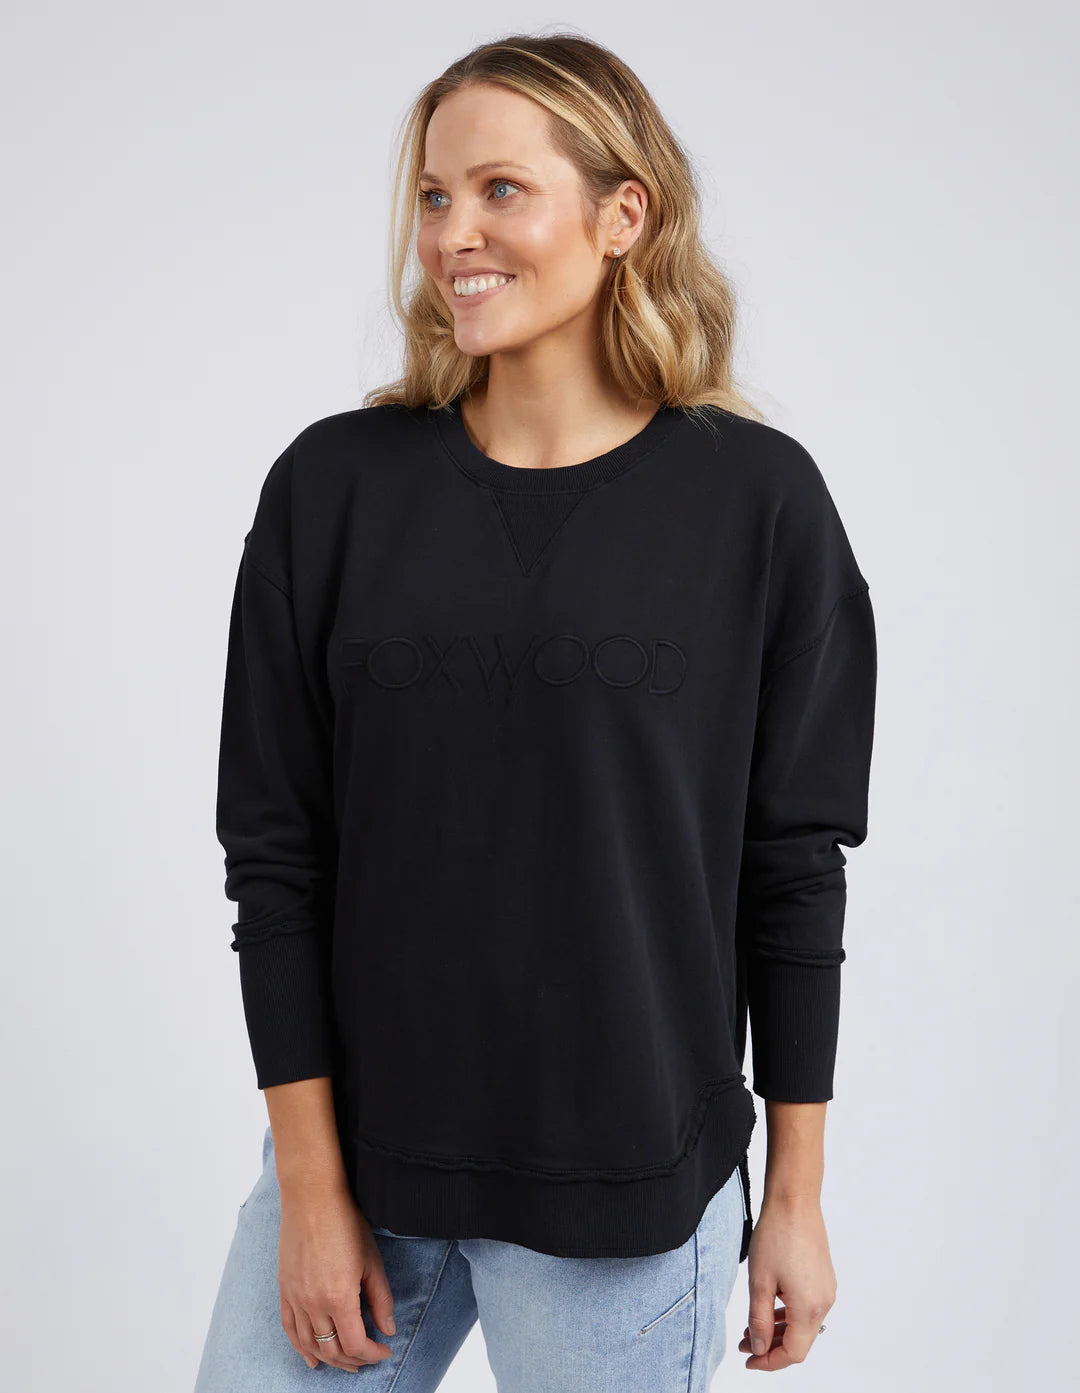 
                  
                    Foxwood Simplified Sweatshirt - Black on Black
                  
                